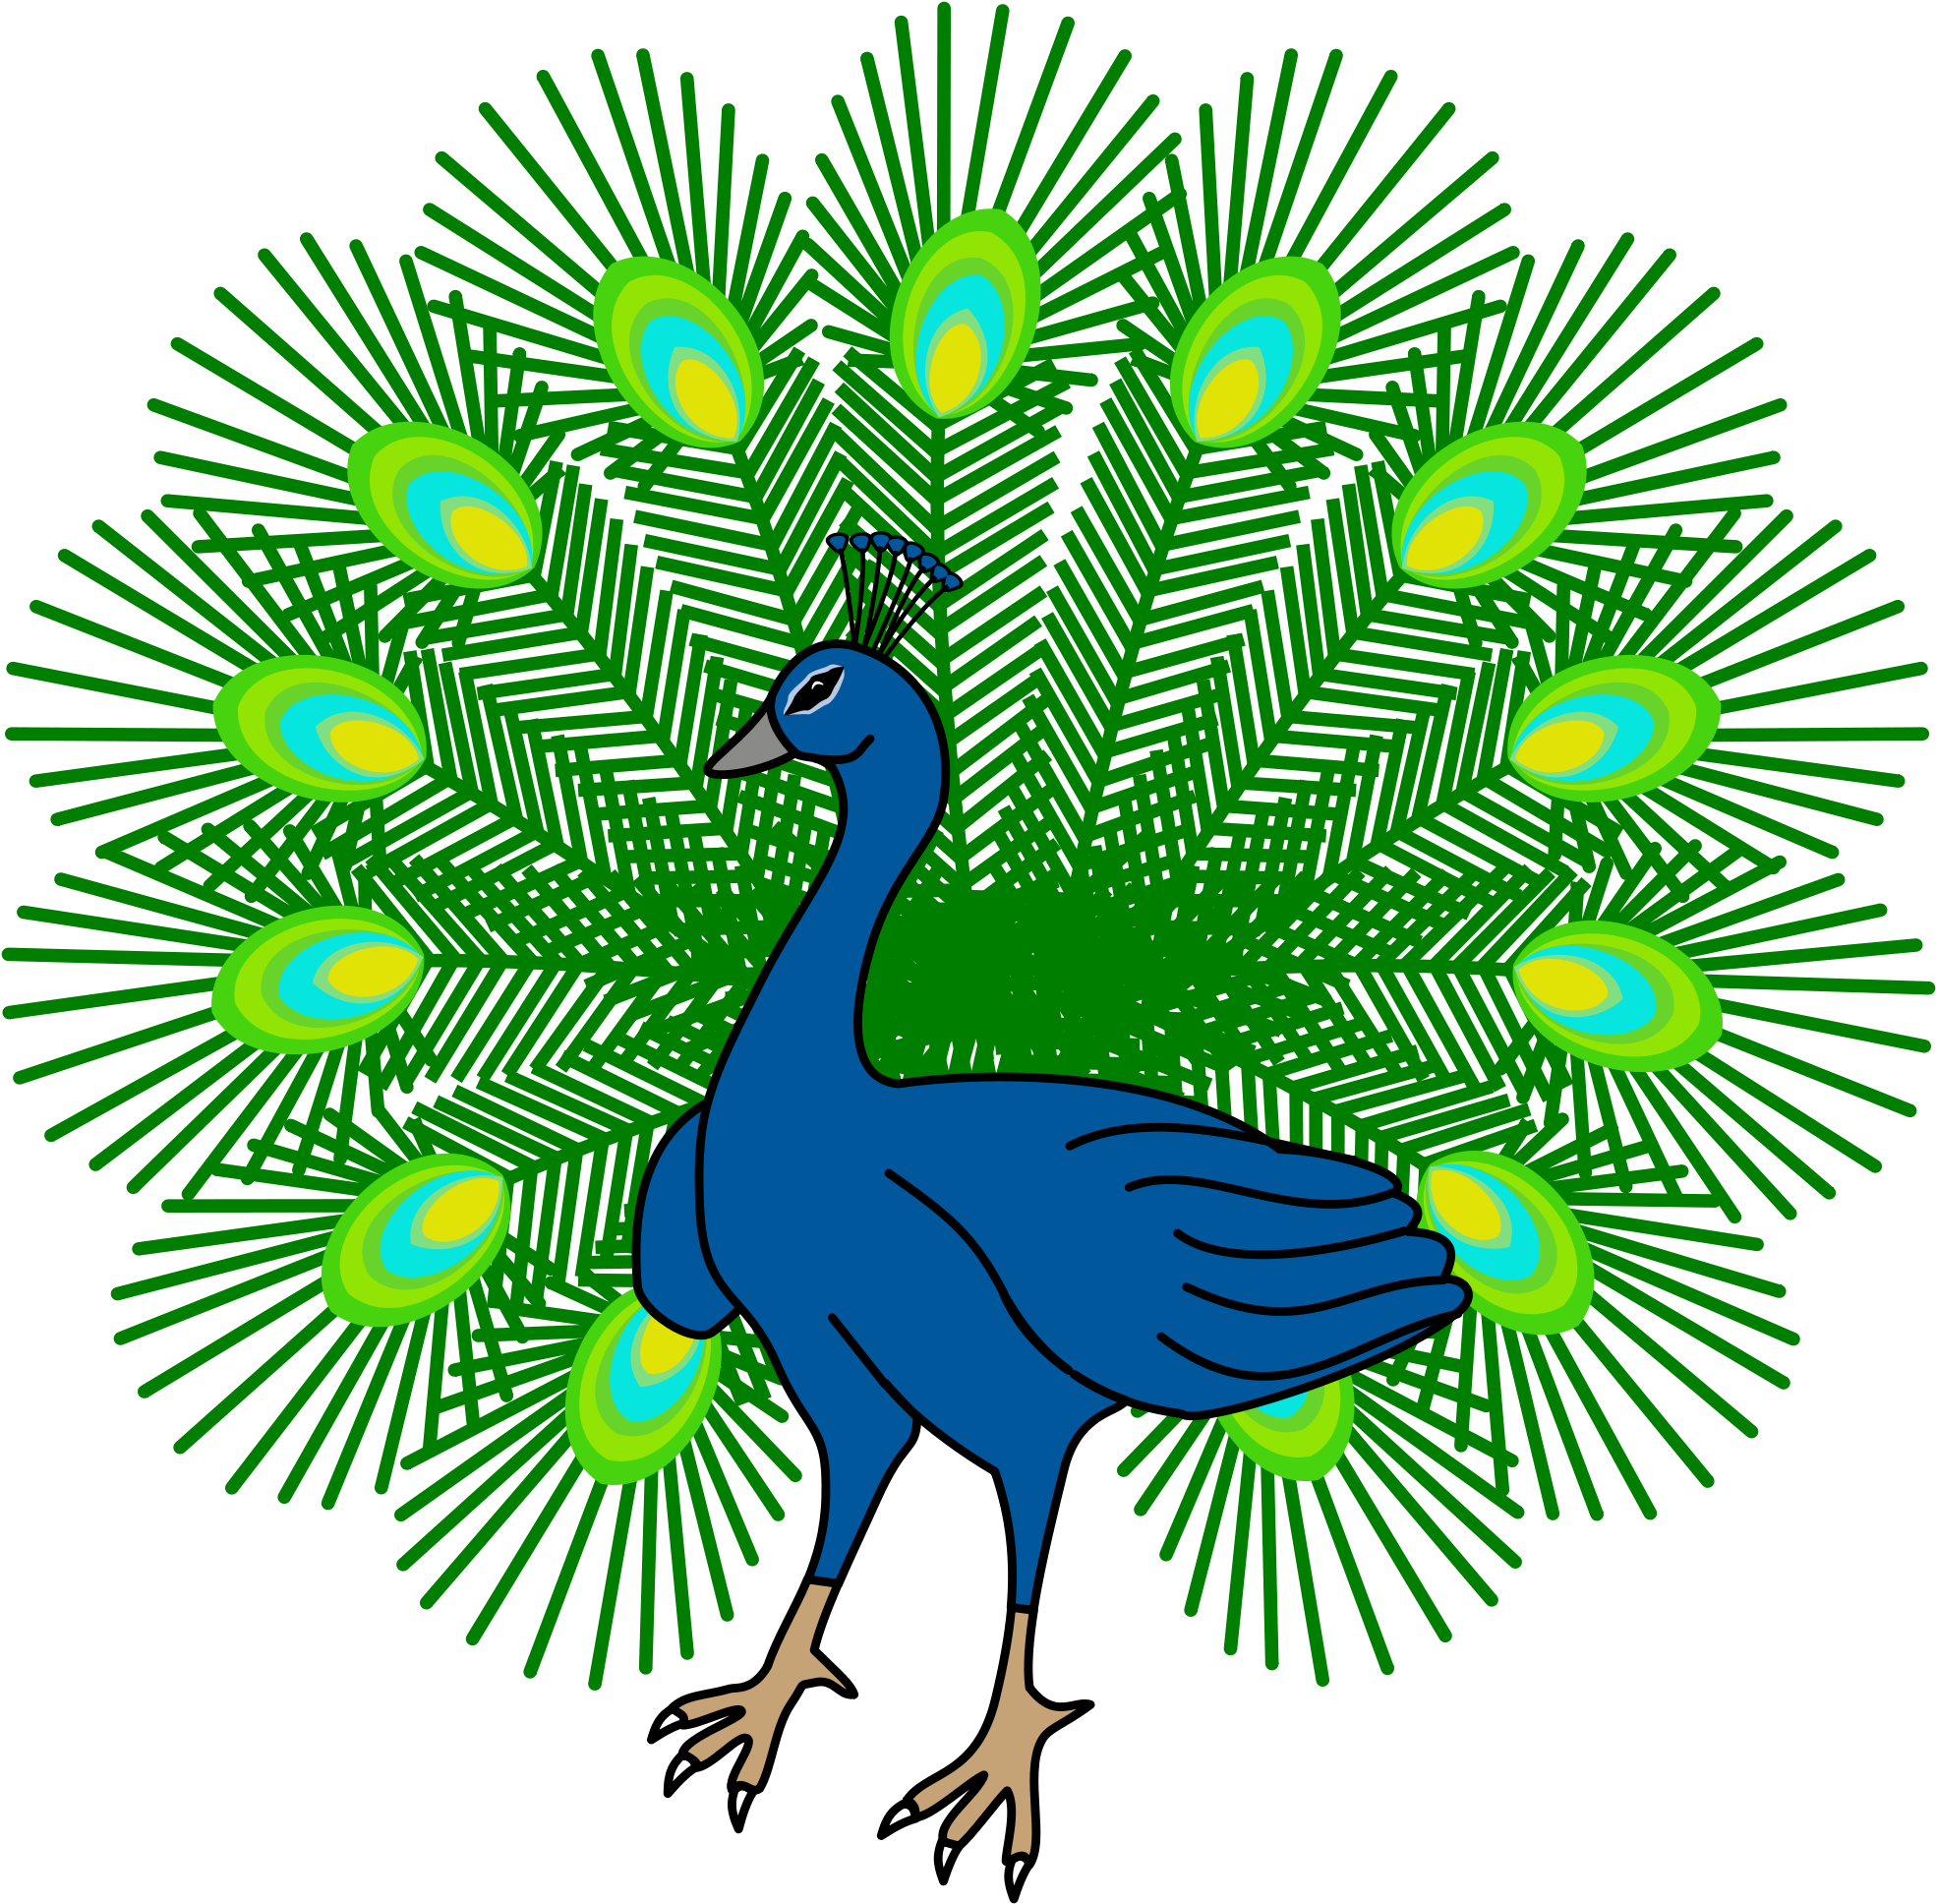 Stylized Peacock Illustration